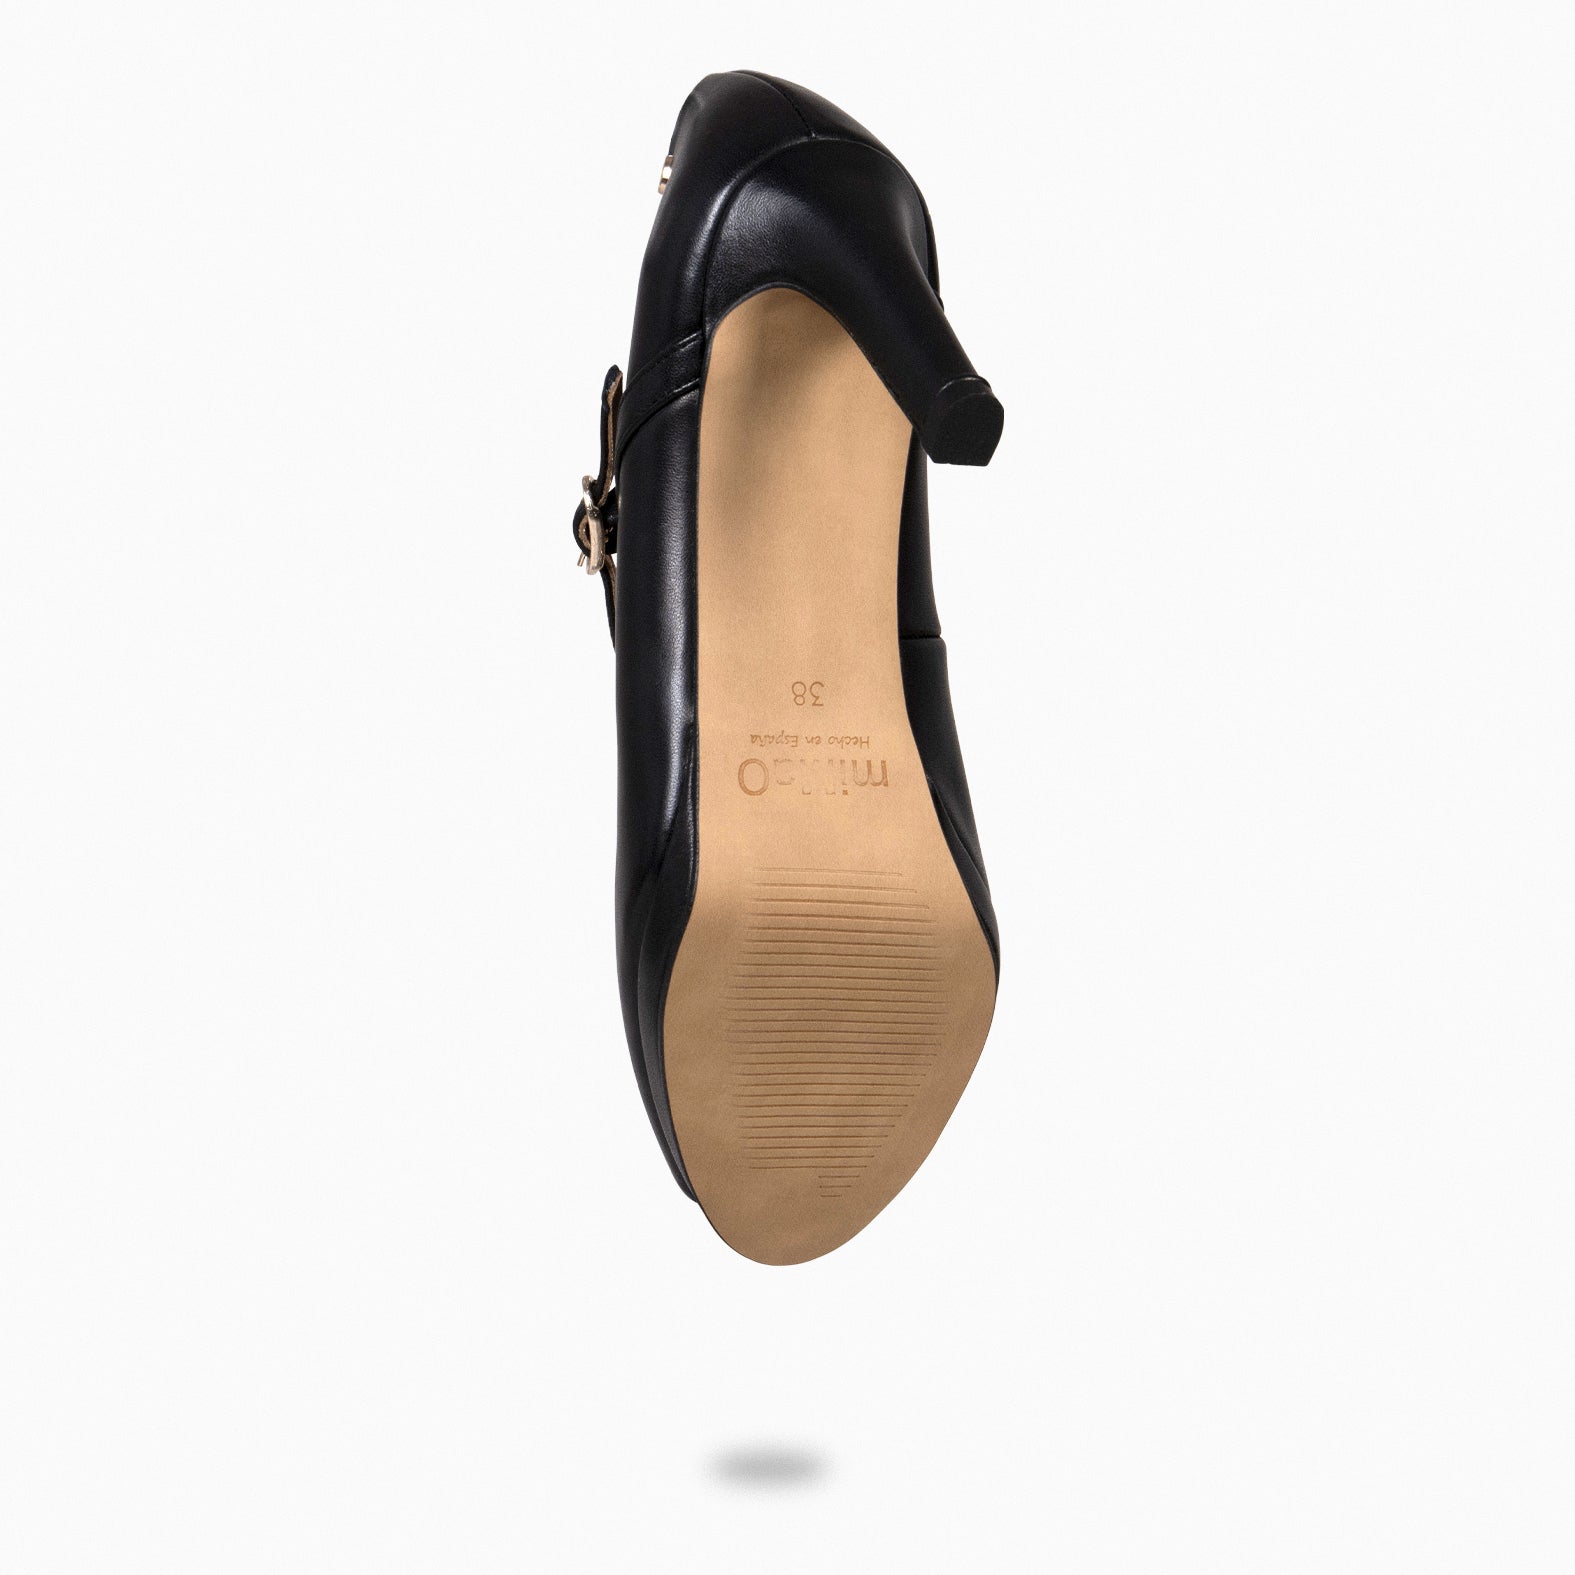 CASSIS – BLACK peep-toe shoes